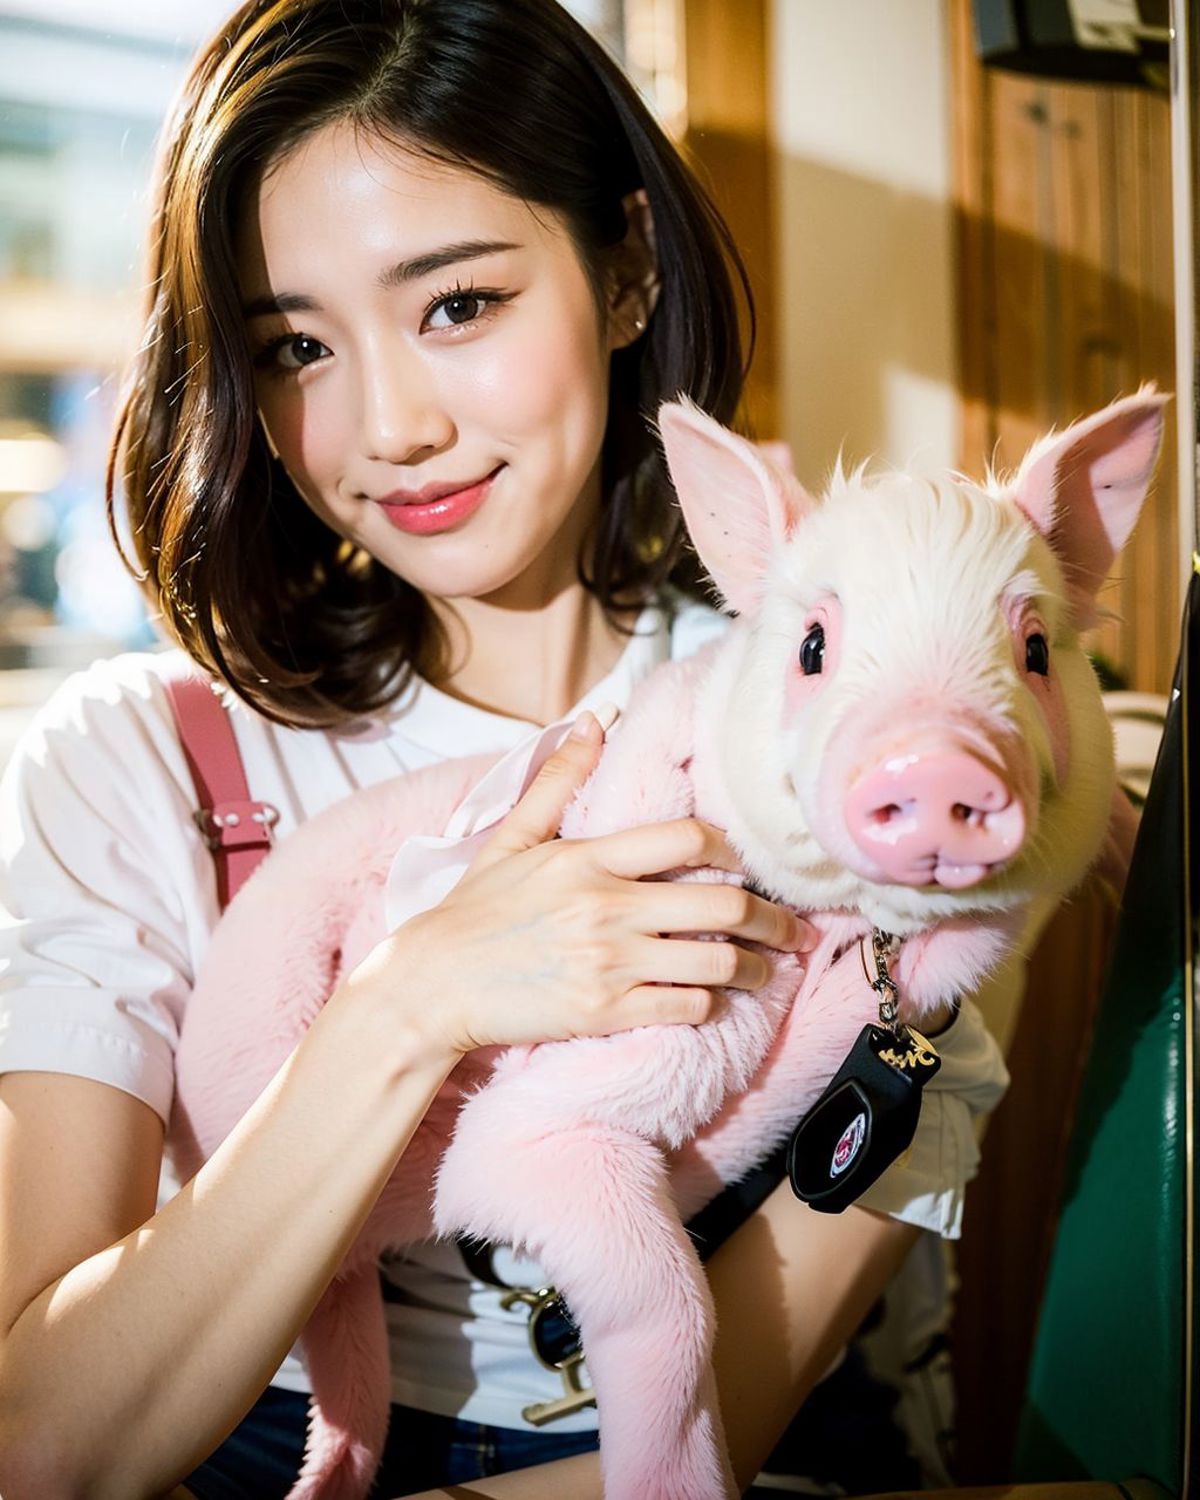 A woman wearing a pink shirt and holding a pink stuffed animal.